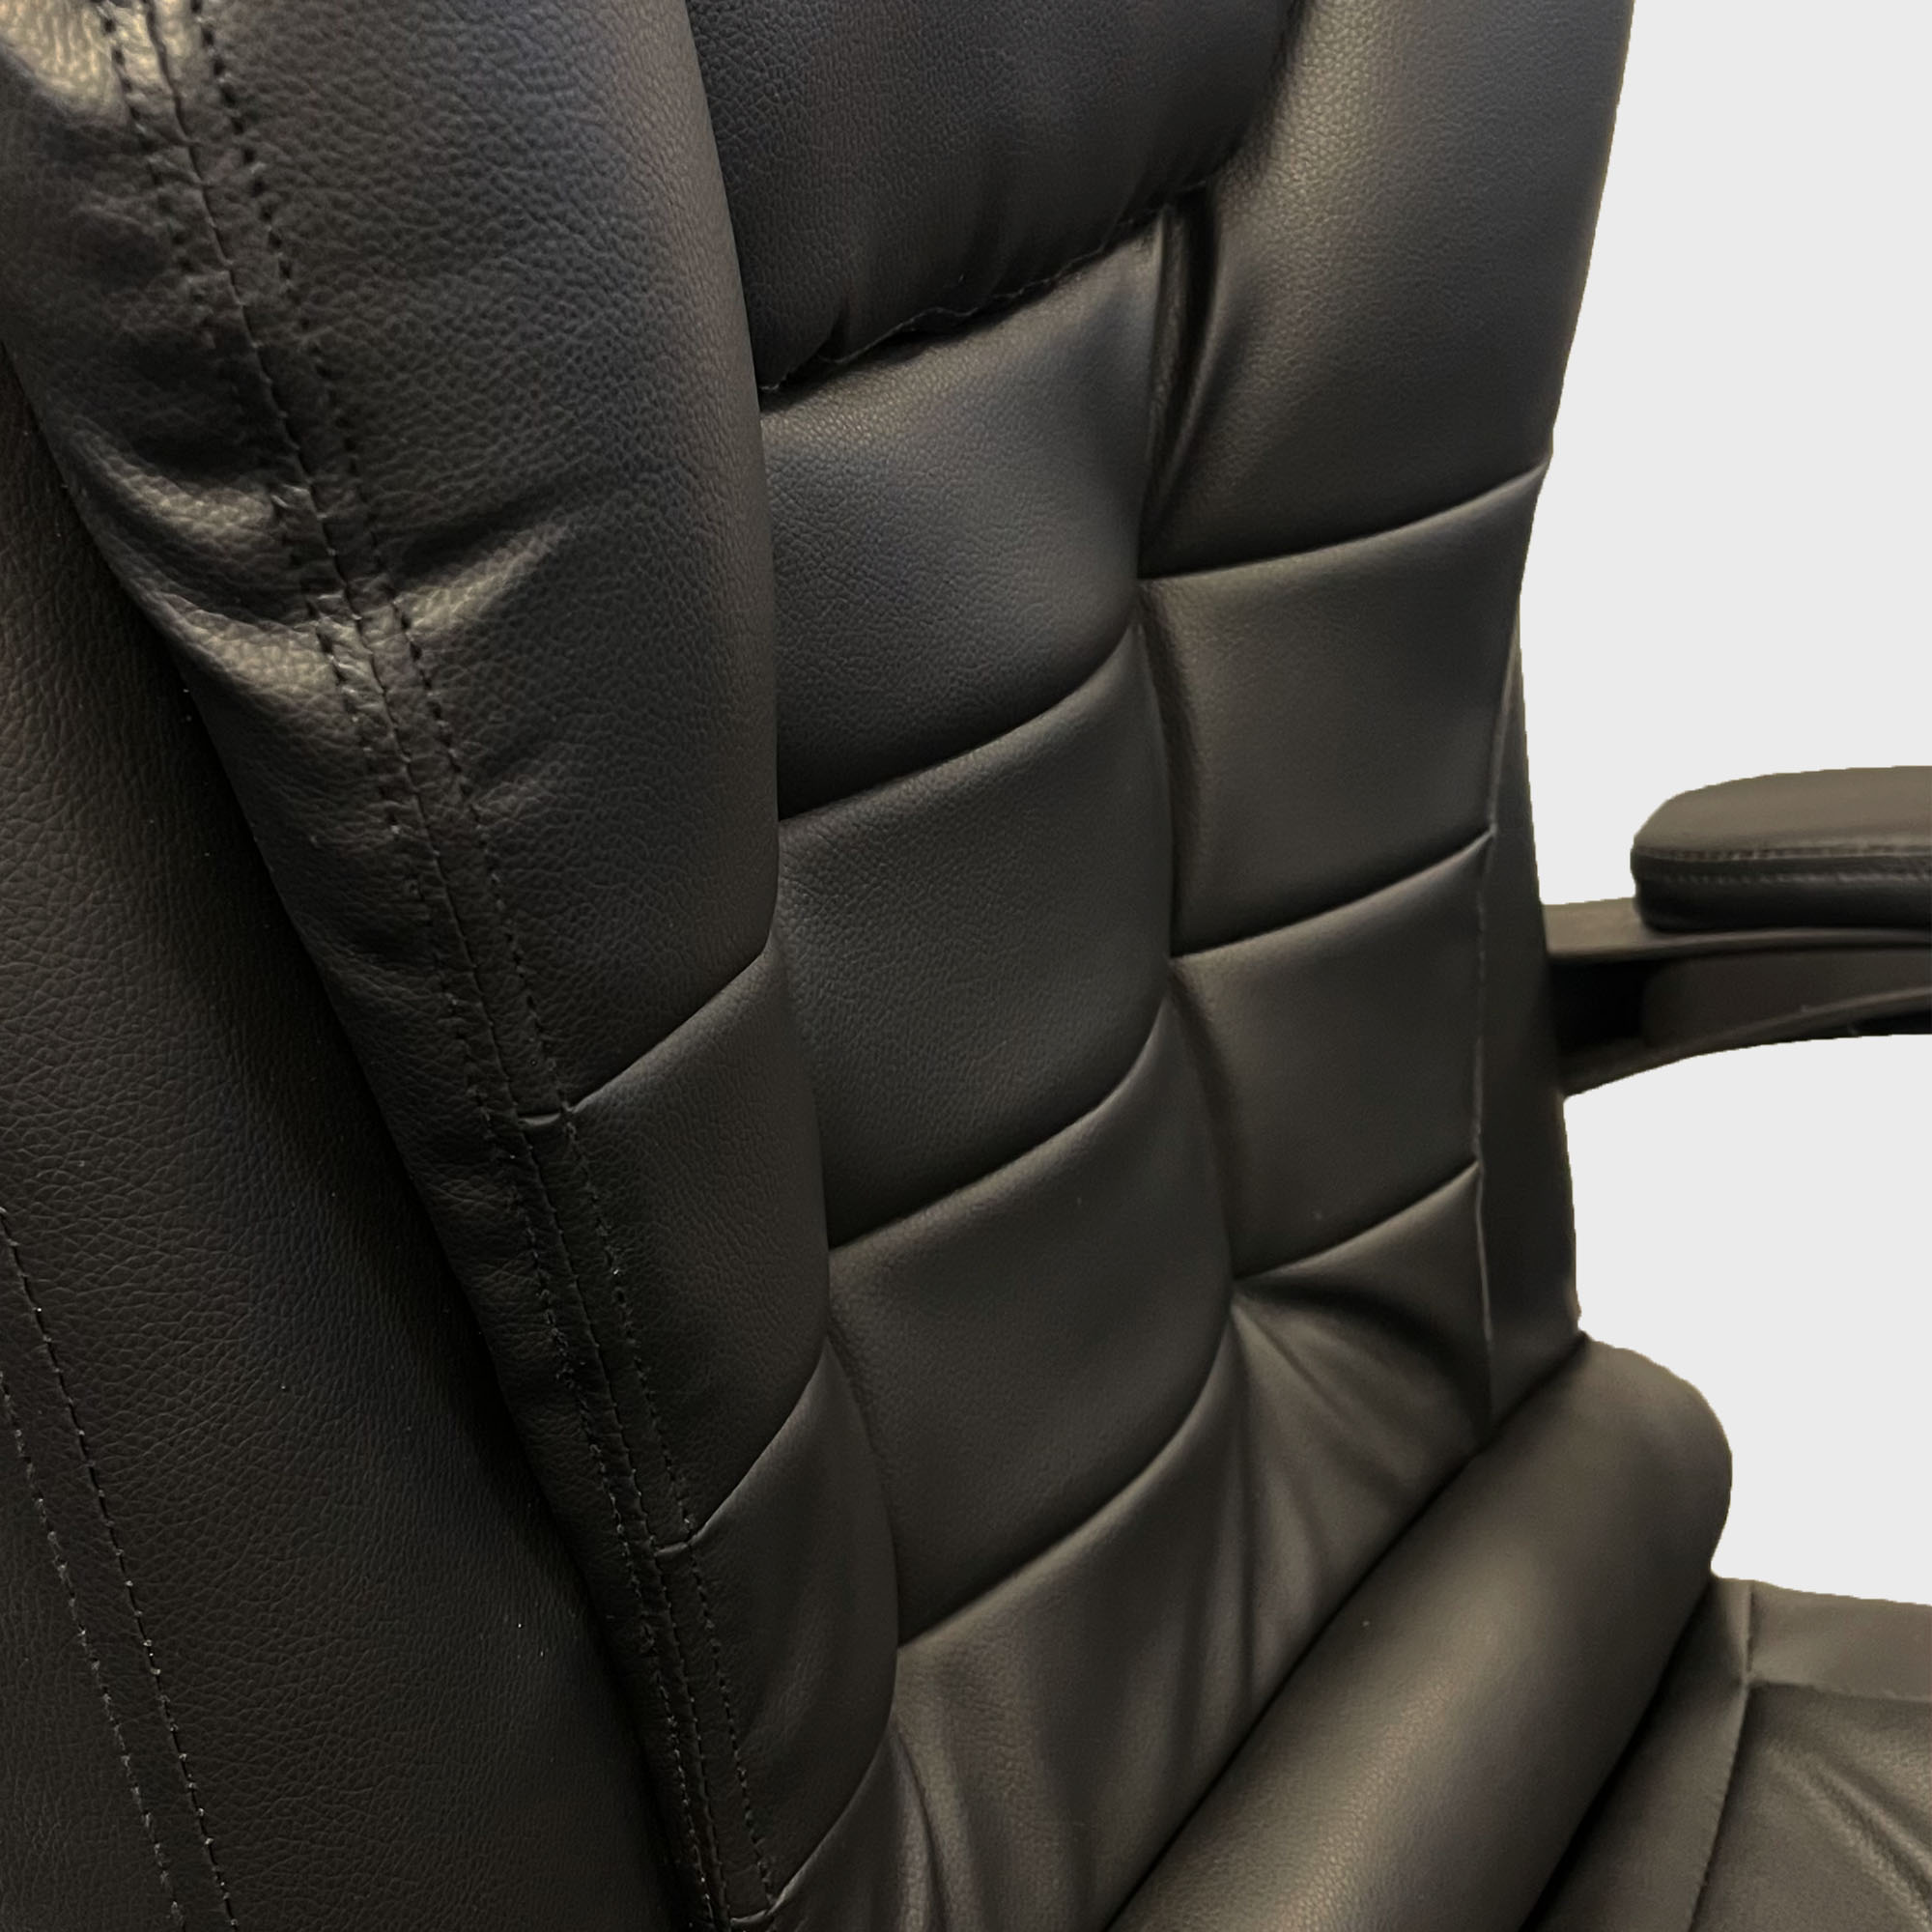 Ergodu Luxury Office Chair with Adjustable Backrest